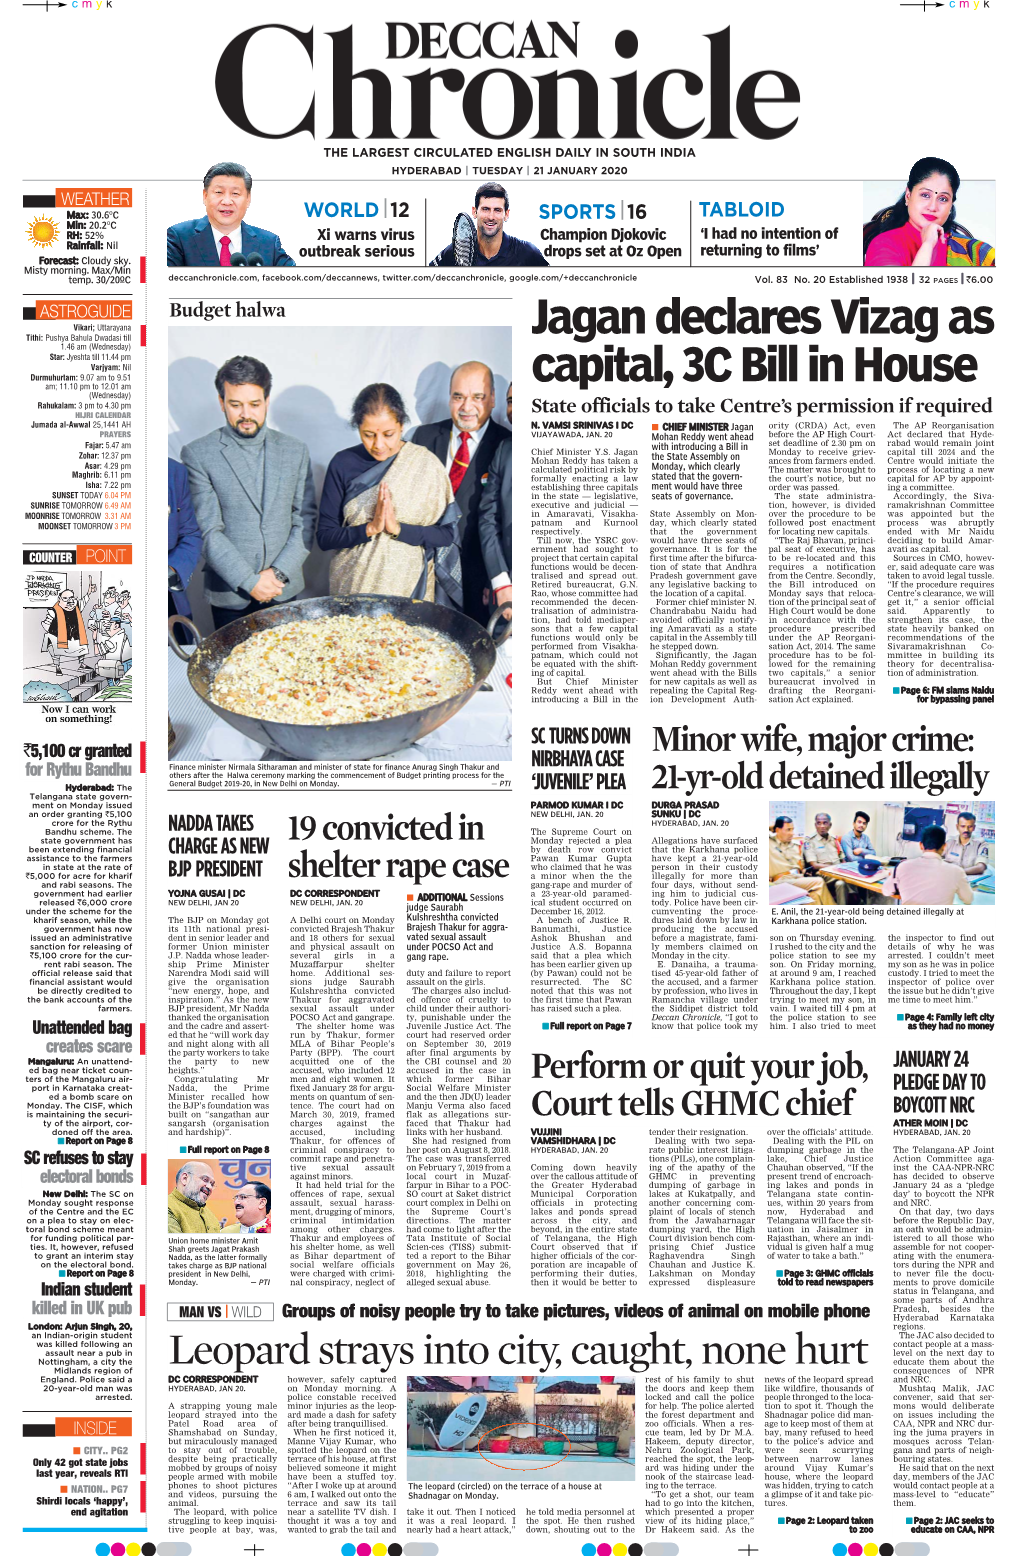 Jagan Declares Vizag As Capital, 3C Bill in House